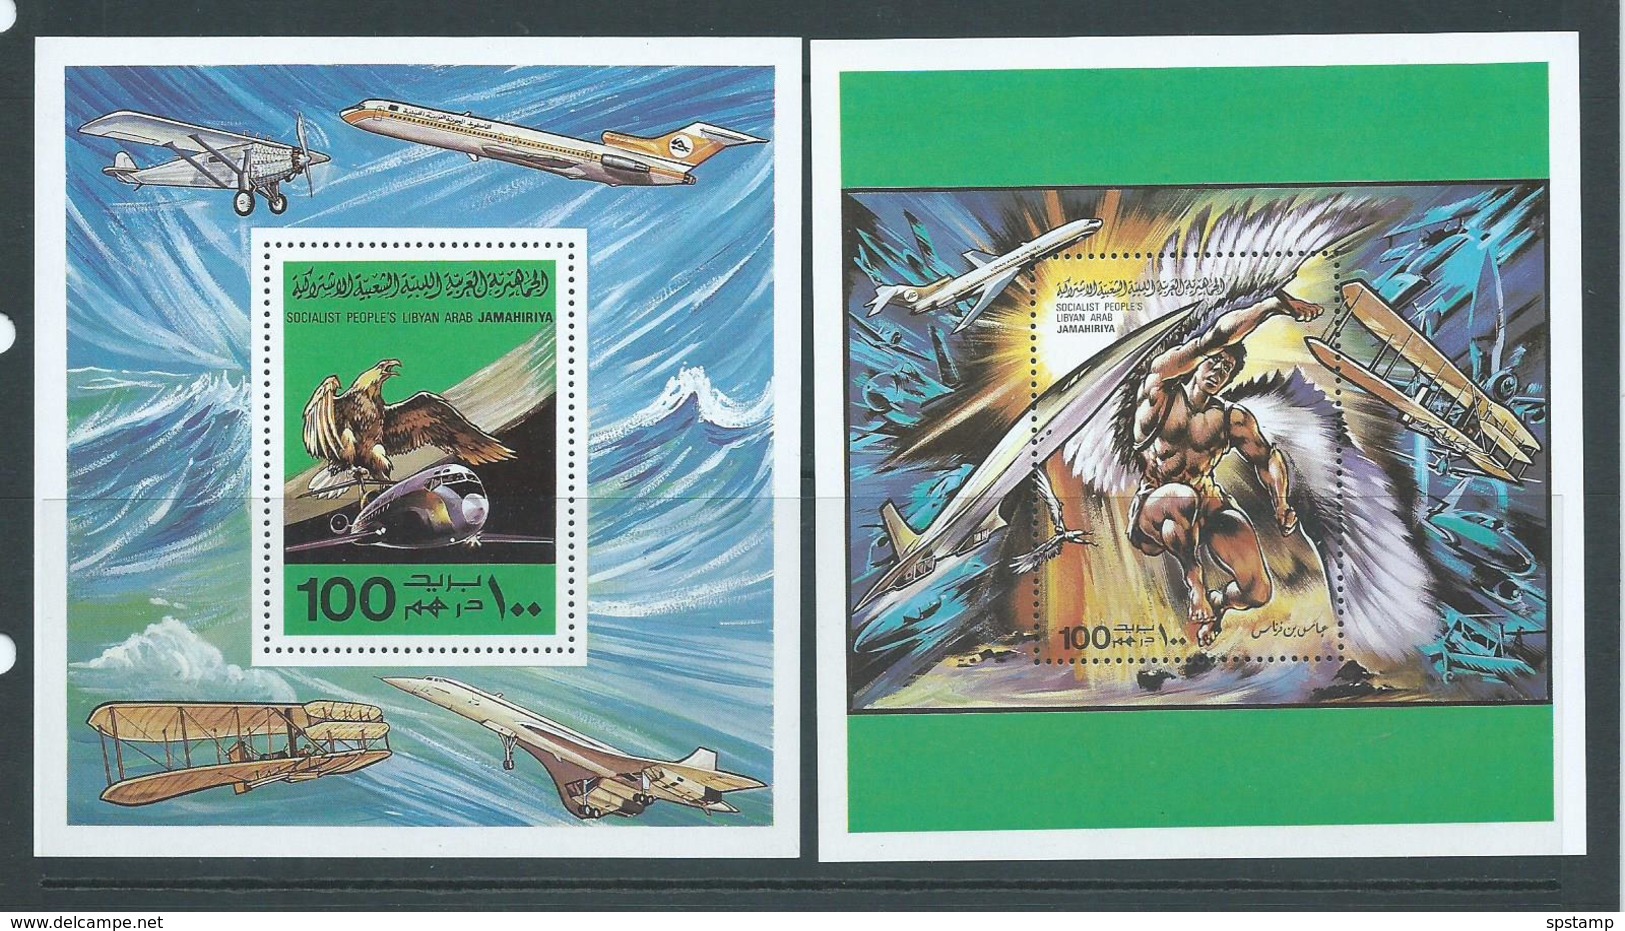 Libya 1978 Manned Flight Anniversary 100 Dm Miniature Sheets Set Of 2 MNH - Libyen